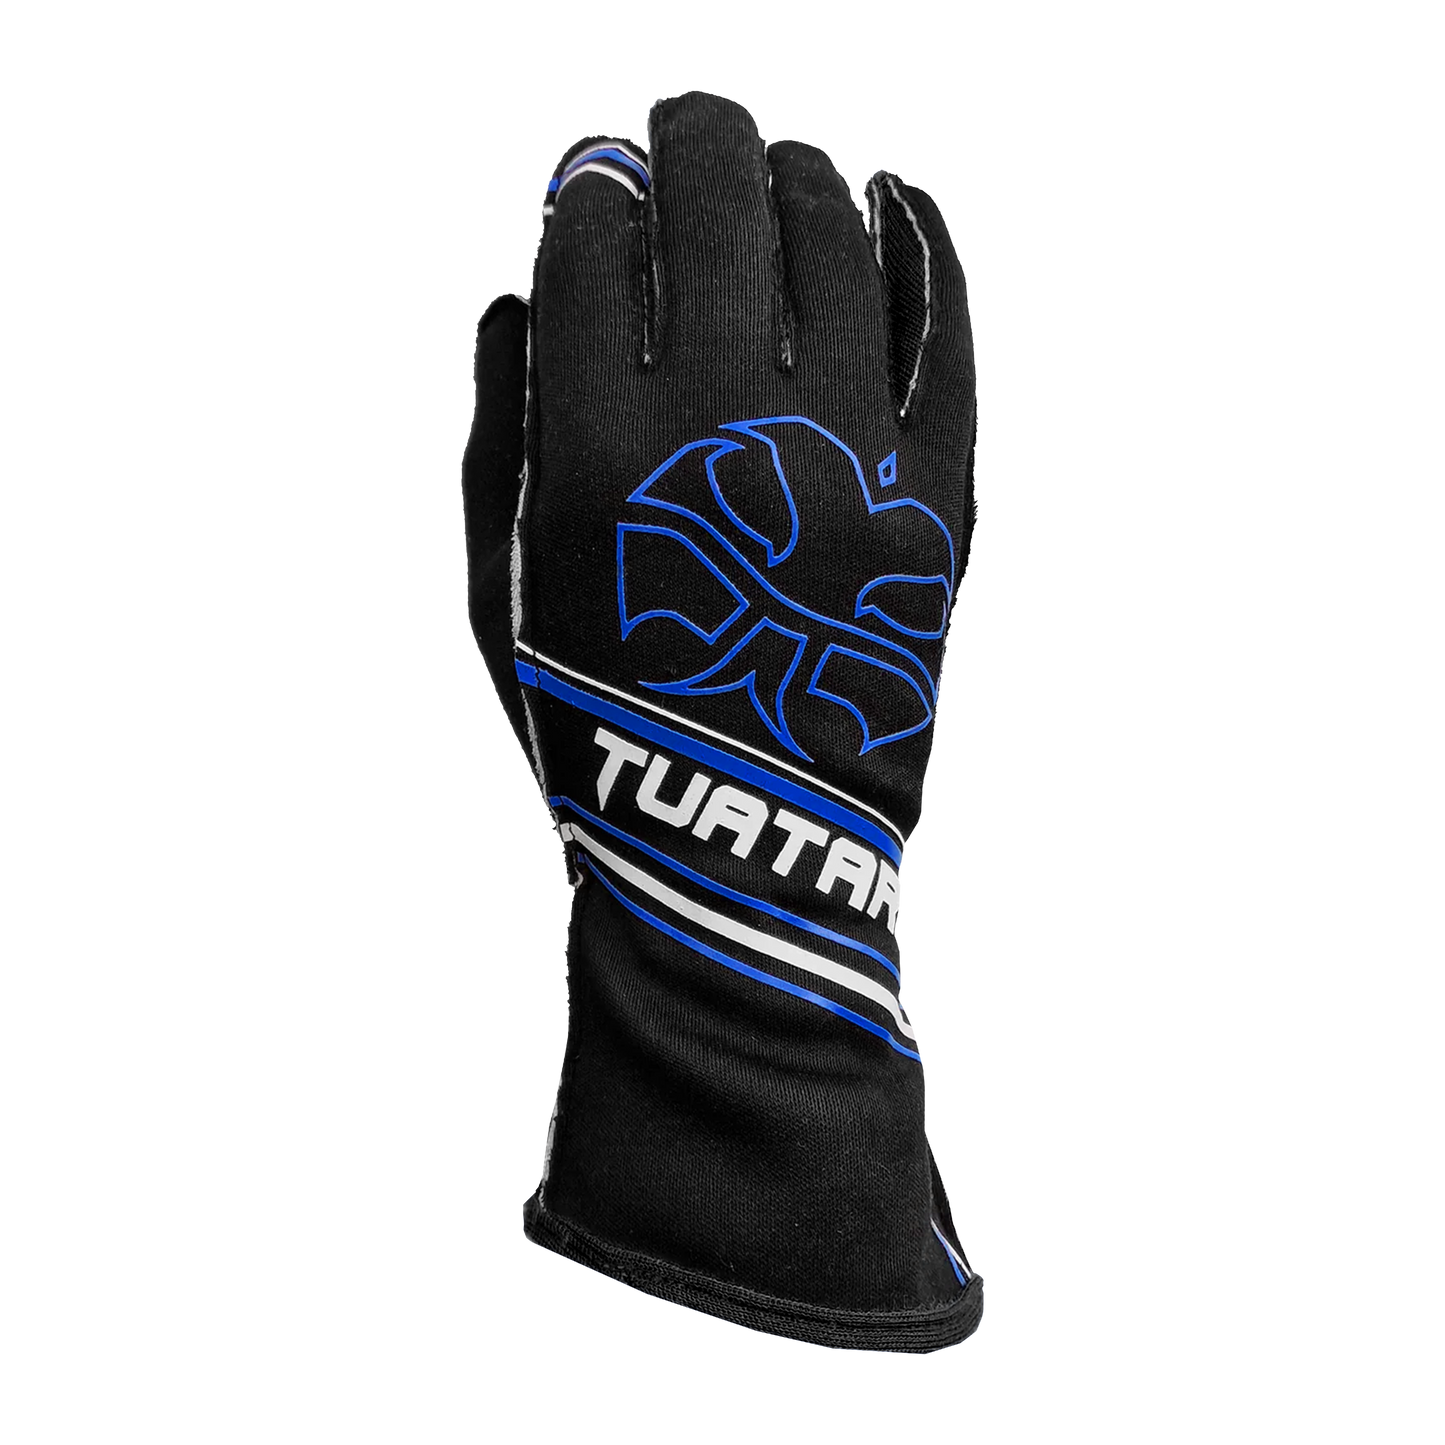 Ultimate Race gloves - Ultra Grip - DOMINATOR - BLK/BL